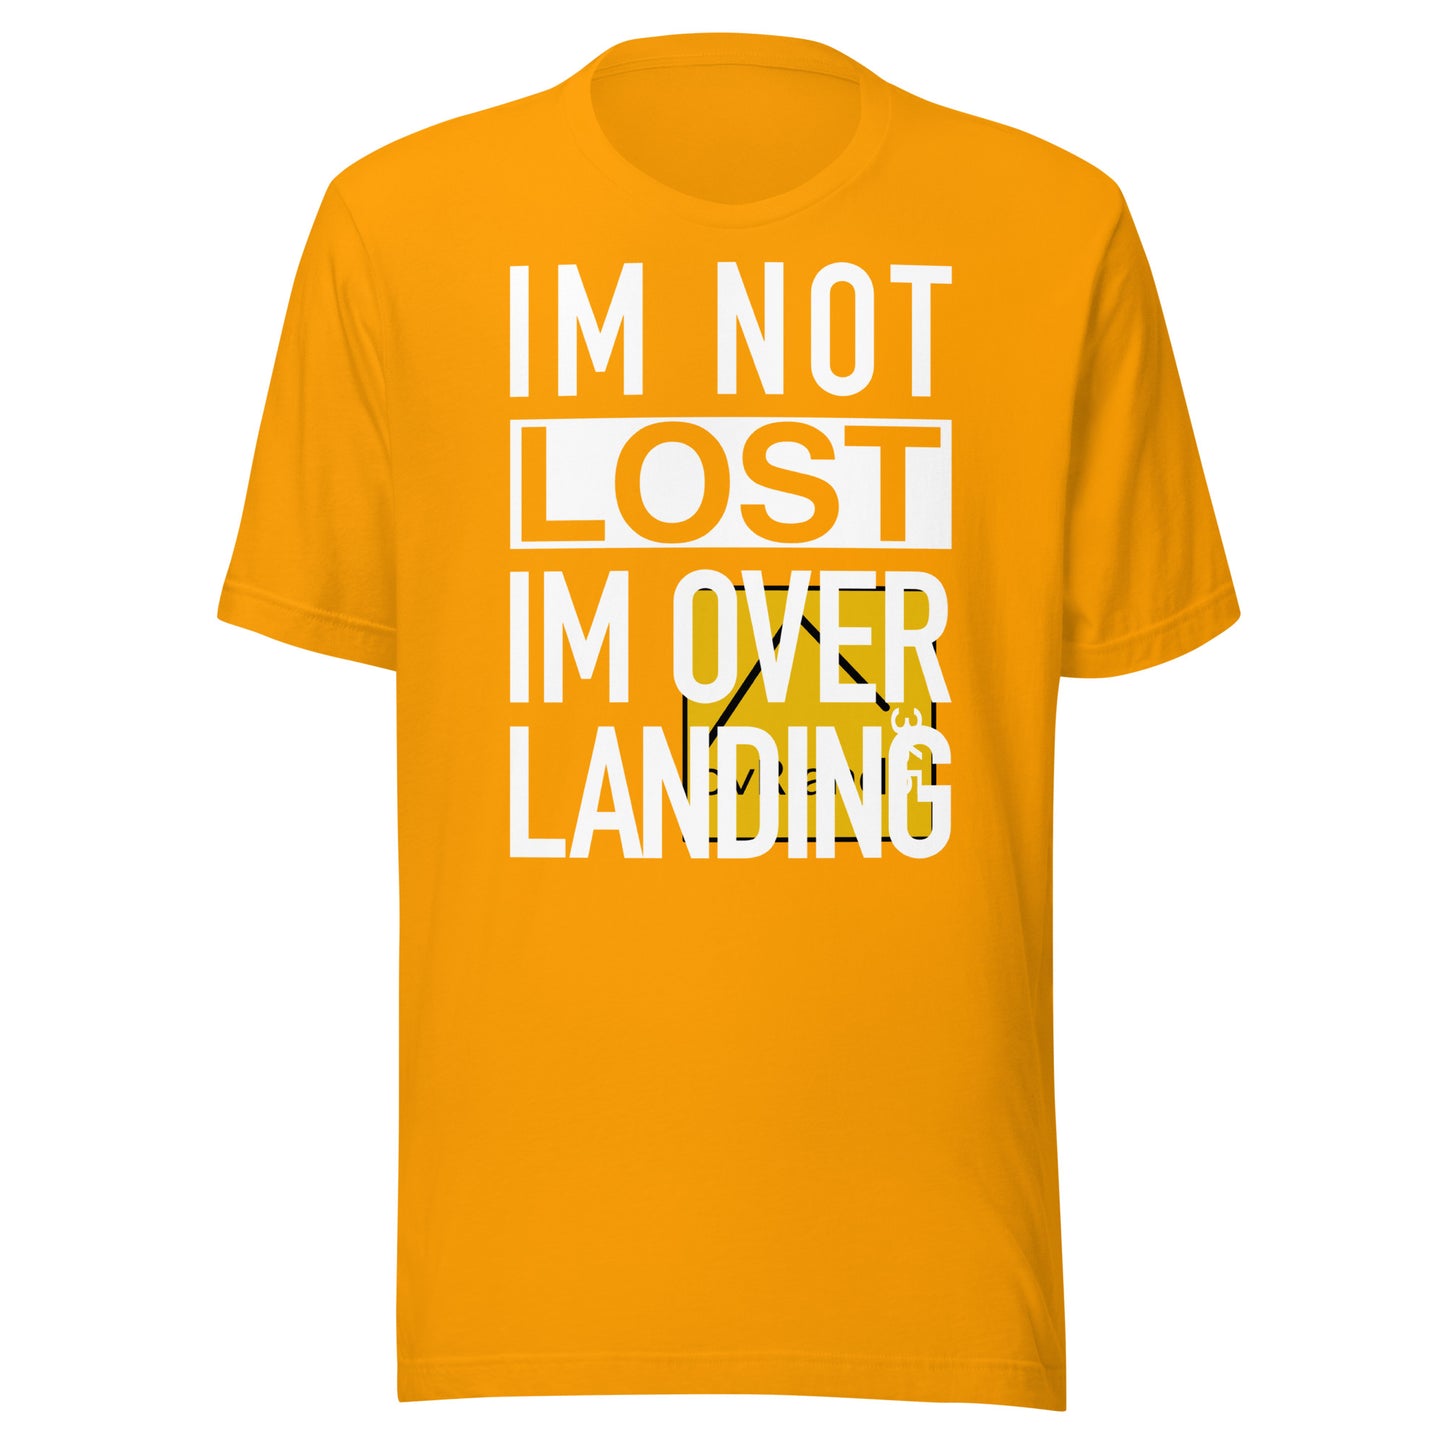 IM NOT LOST IM OVER LANDING - Gold t-shirt. logo misprint. overland365.com